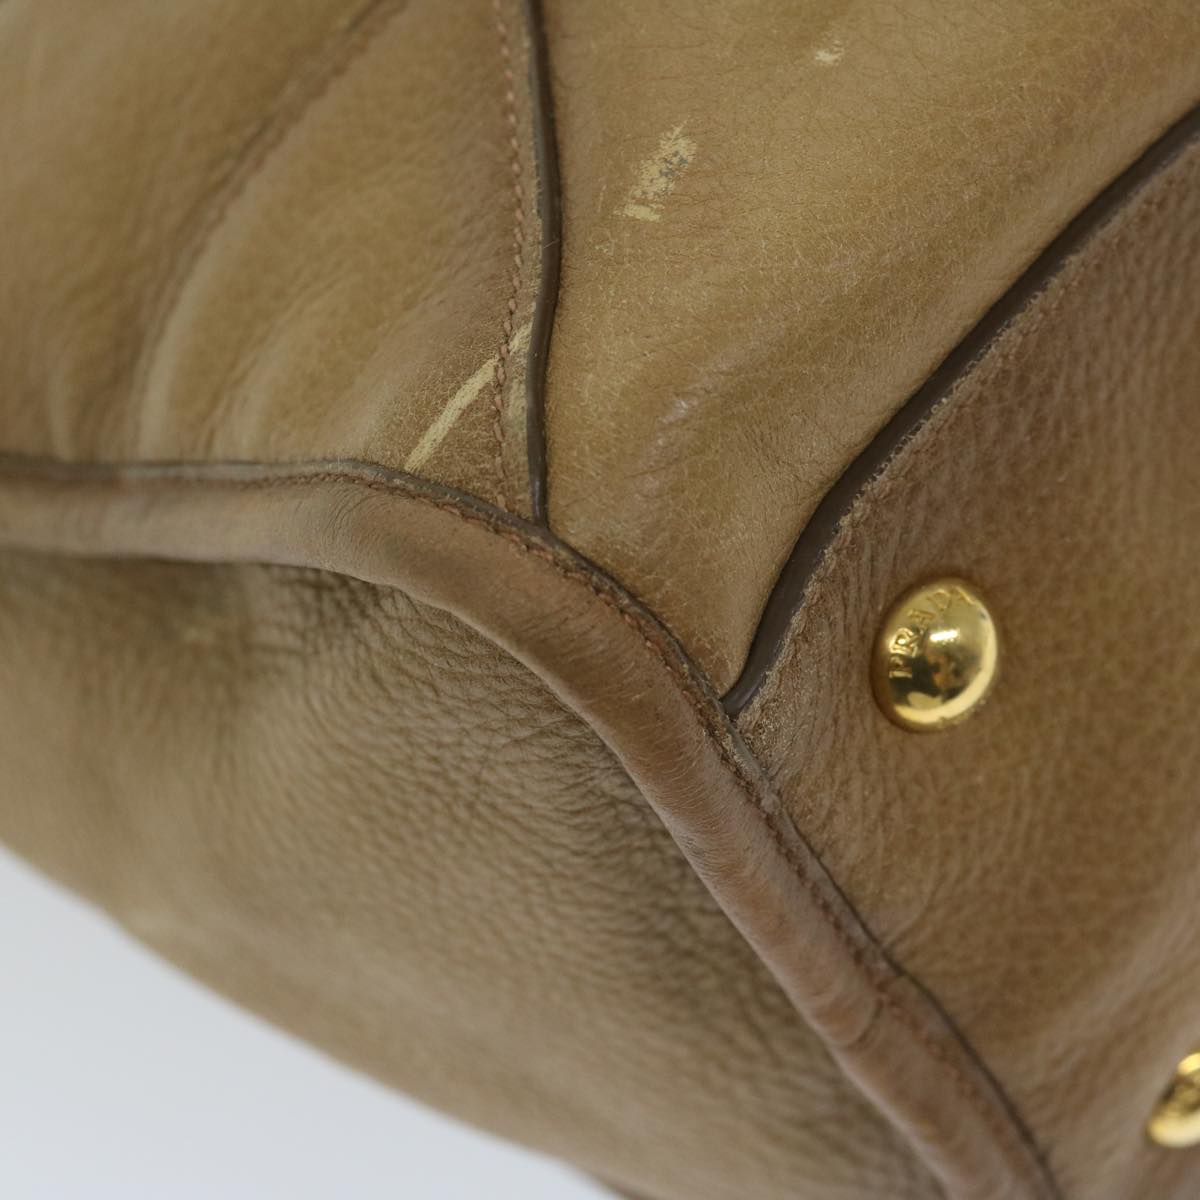 PRADA Hand Bag Leather 2way Brown Auth 61418